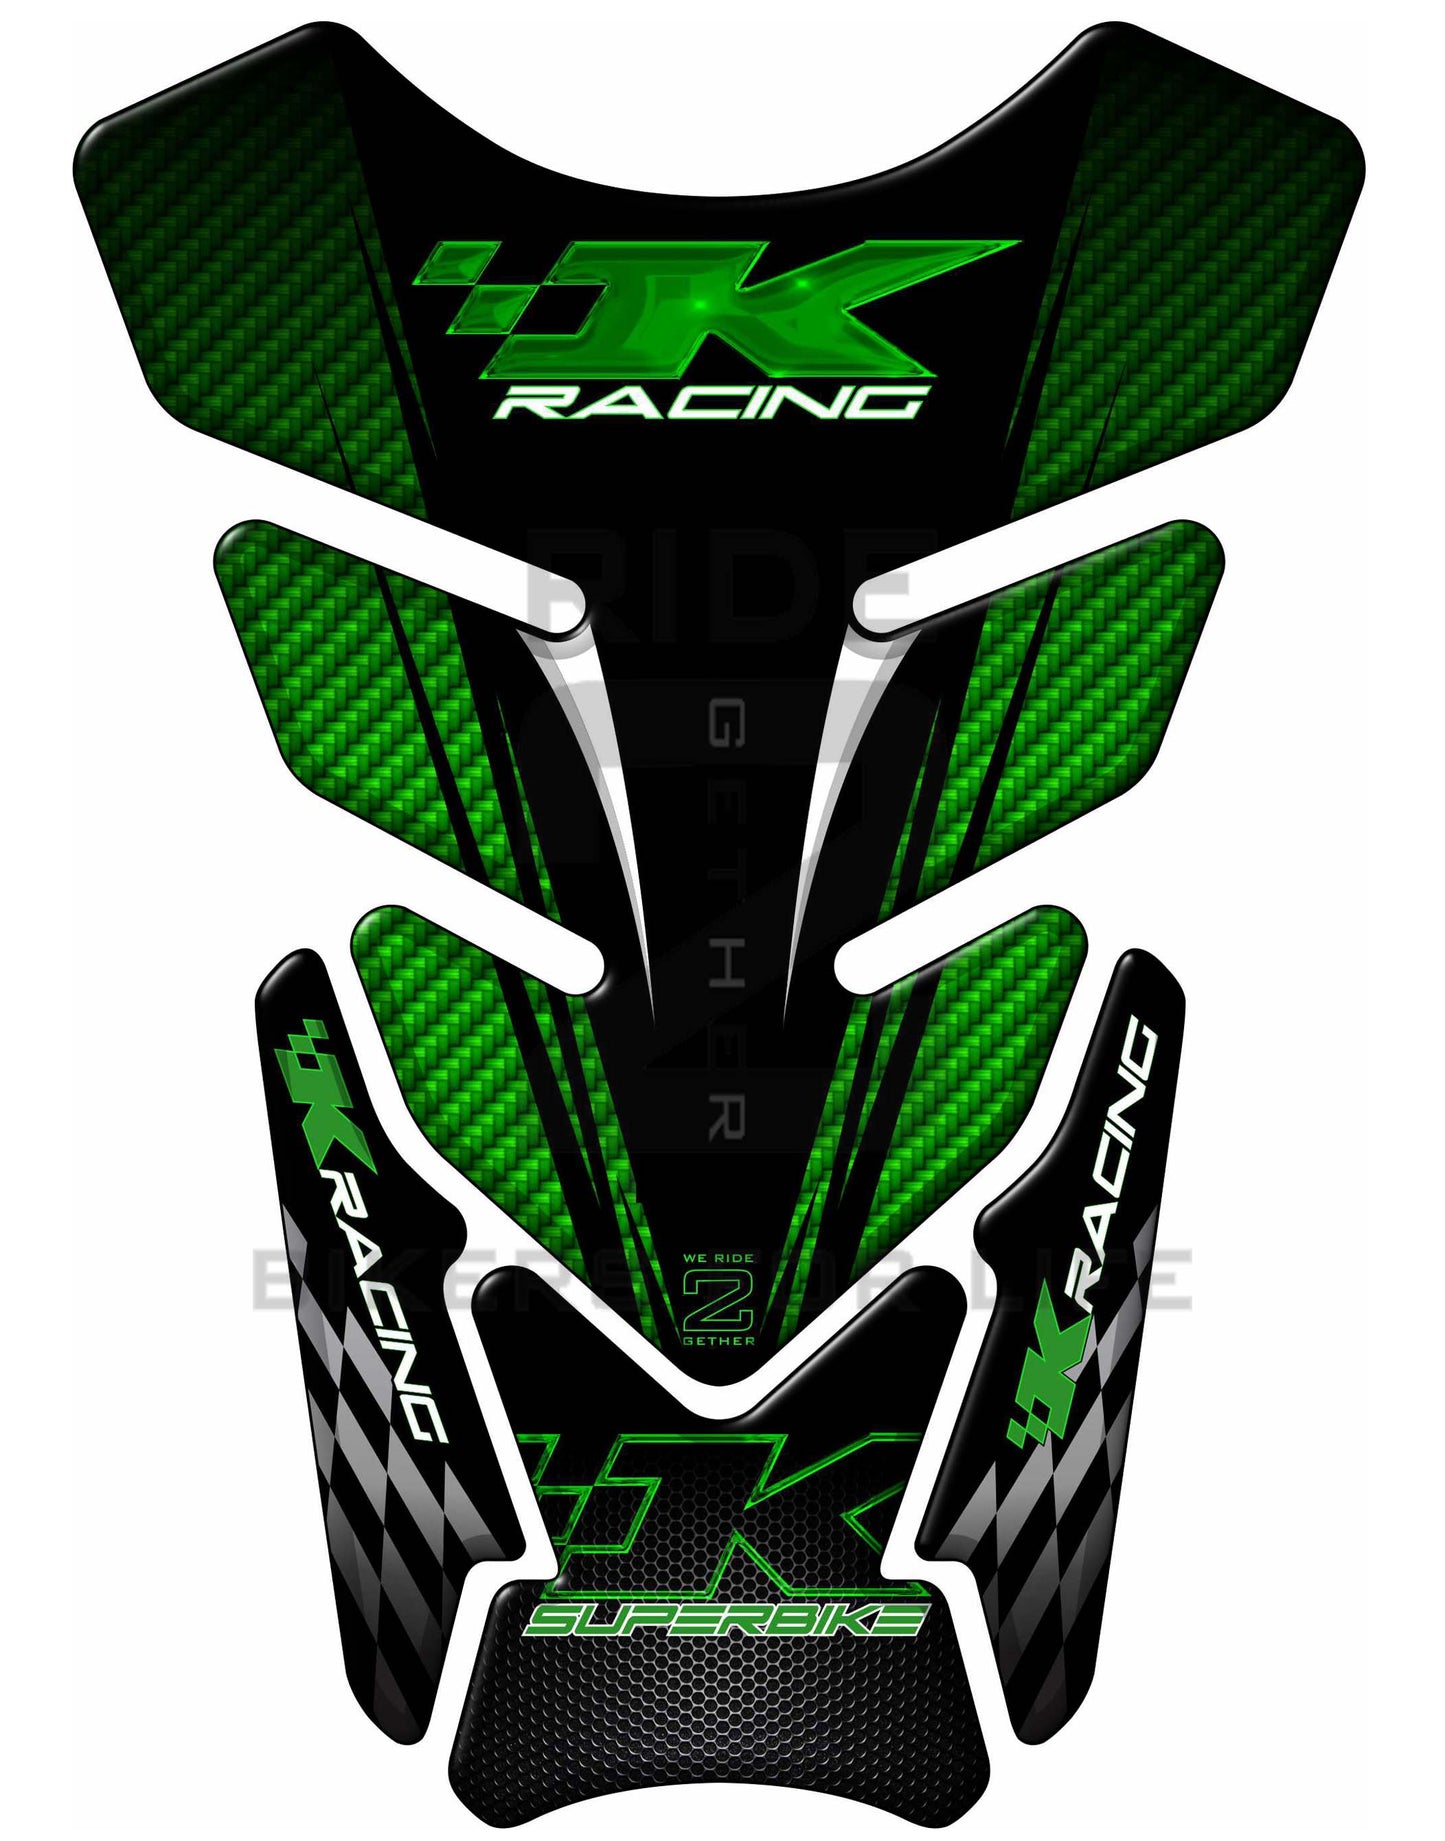 Kawasaki K Racing Green and Black Carbon Fibre SuperBike Tank Pad / Protector